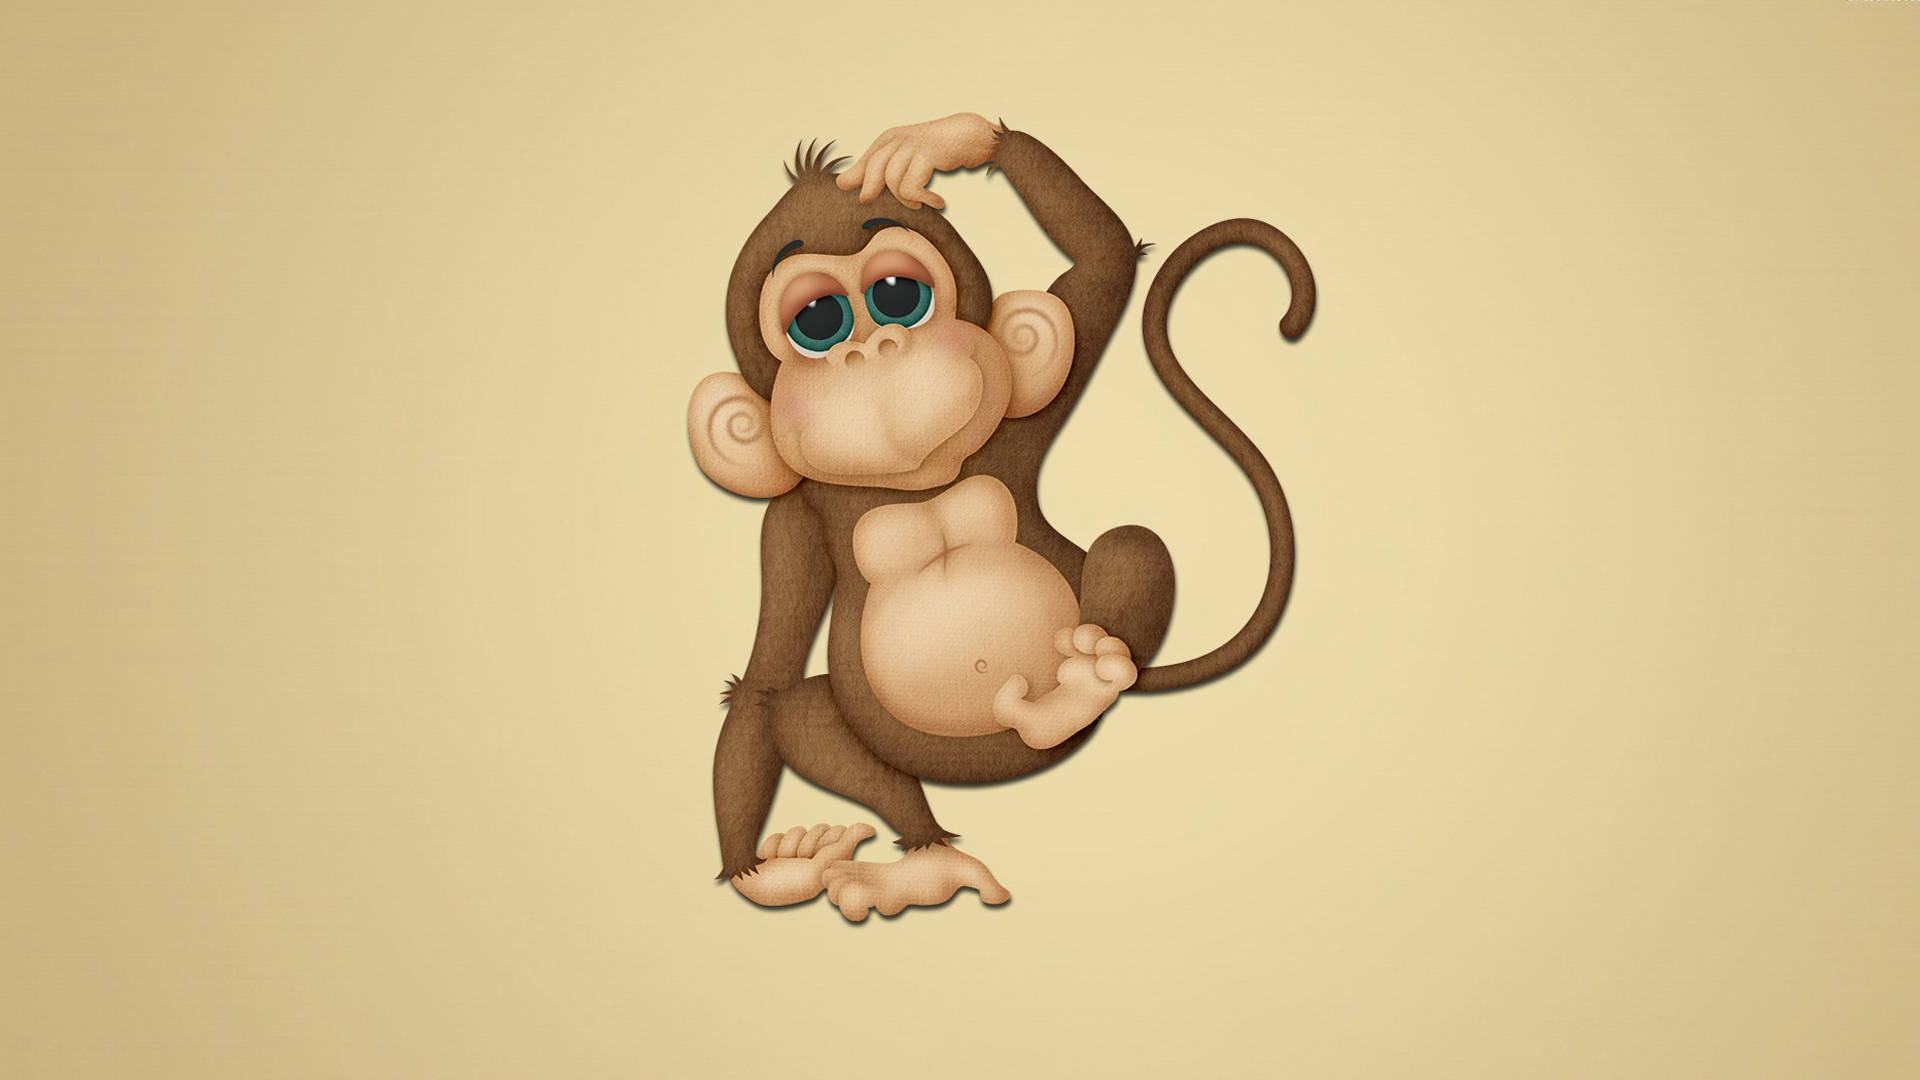 Download Thinking Monkey Cartoon Wallpaper 